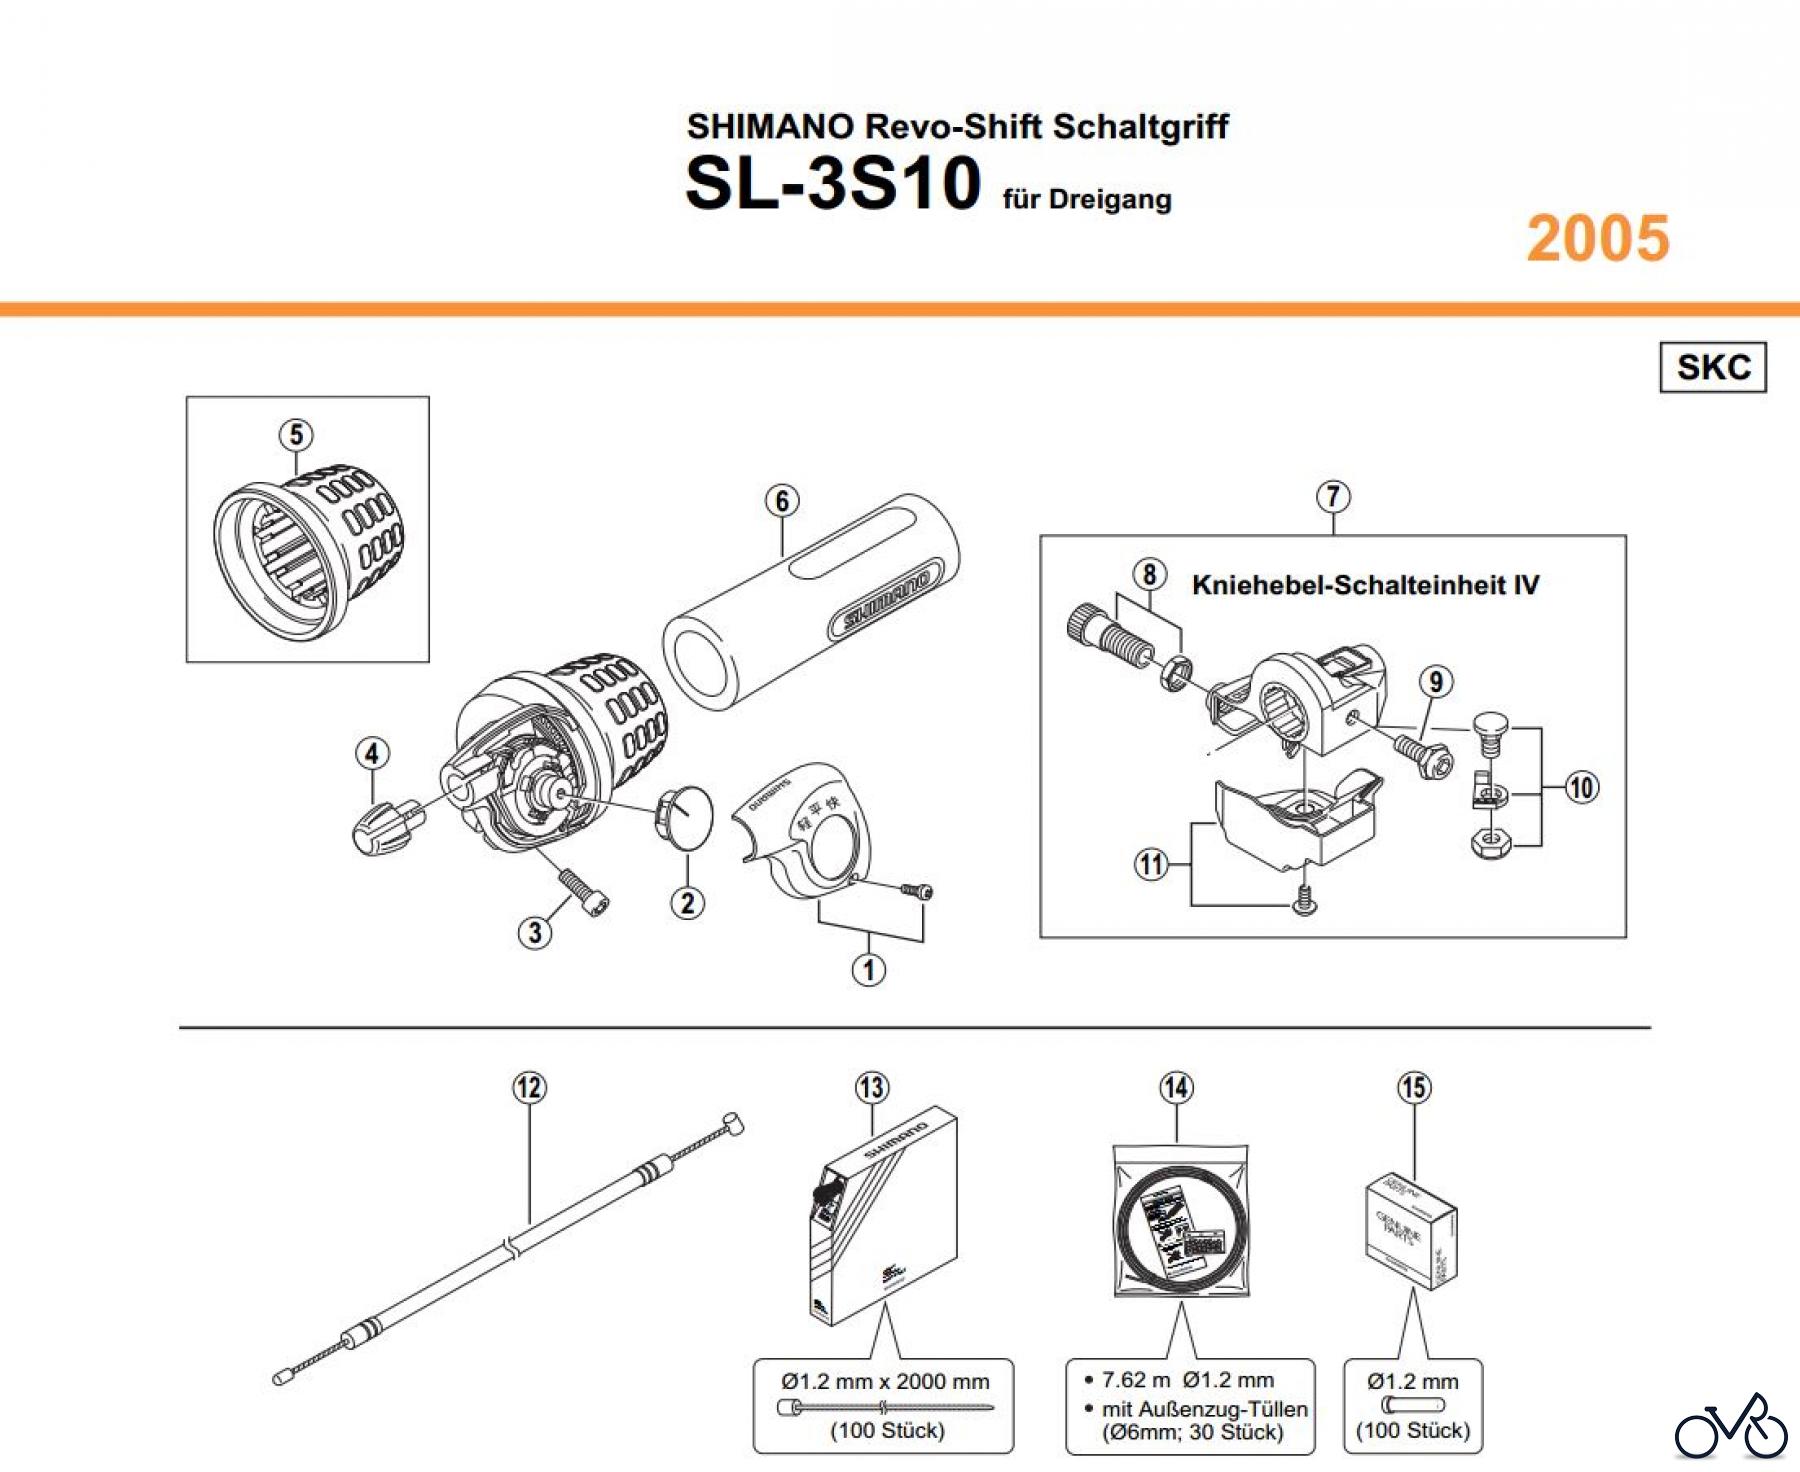  Shimano SL Shift Lever - Schalthebel SL-3S10 2005 SHIMANO Revo-Shift Schaltgriff